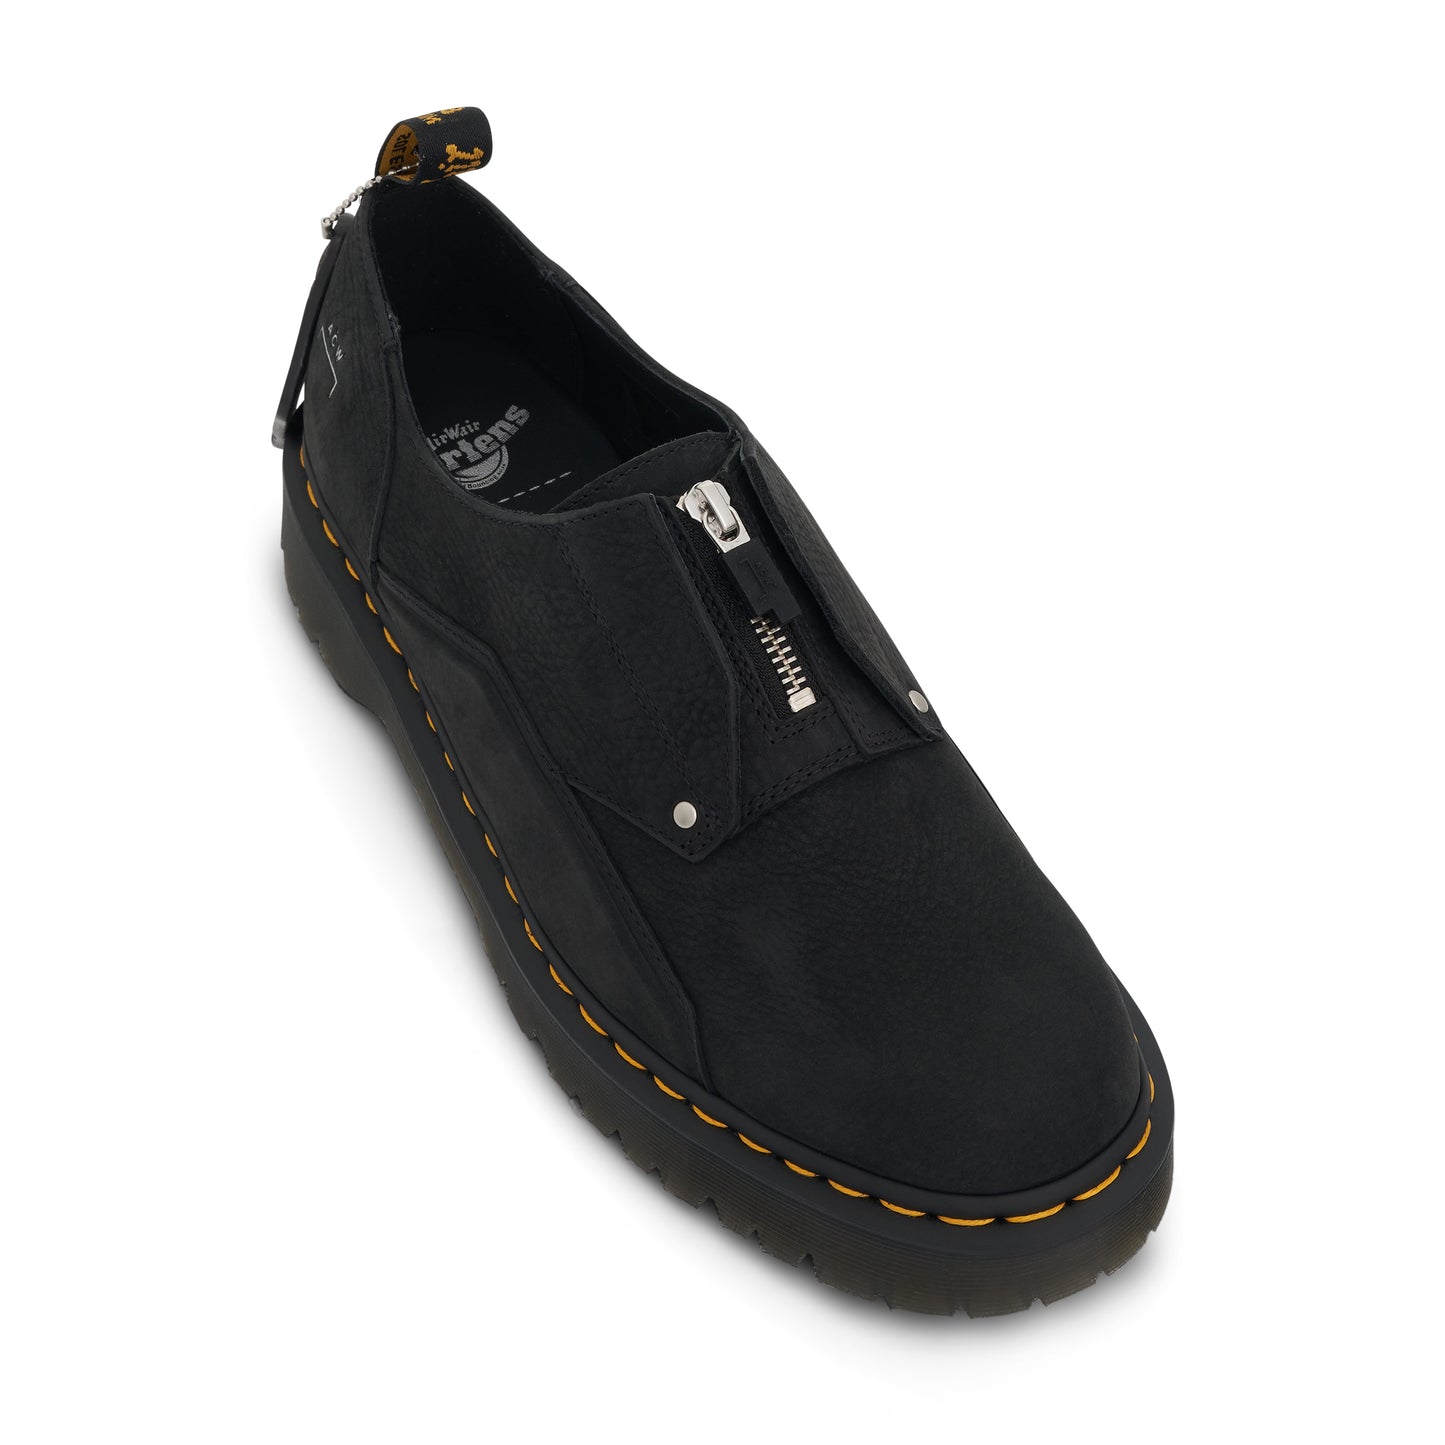 ACW x Dr Martens 1461 Bex Low Shoes in Black